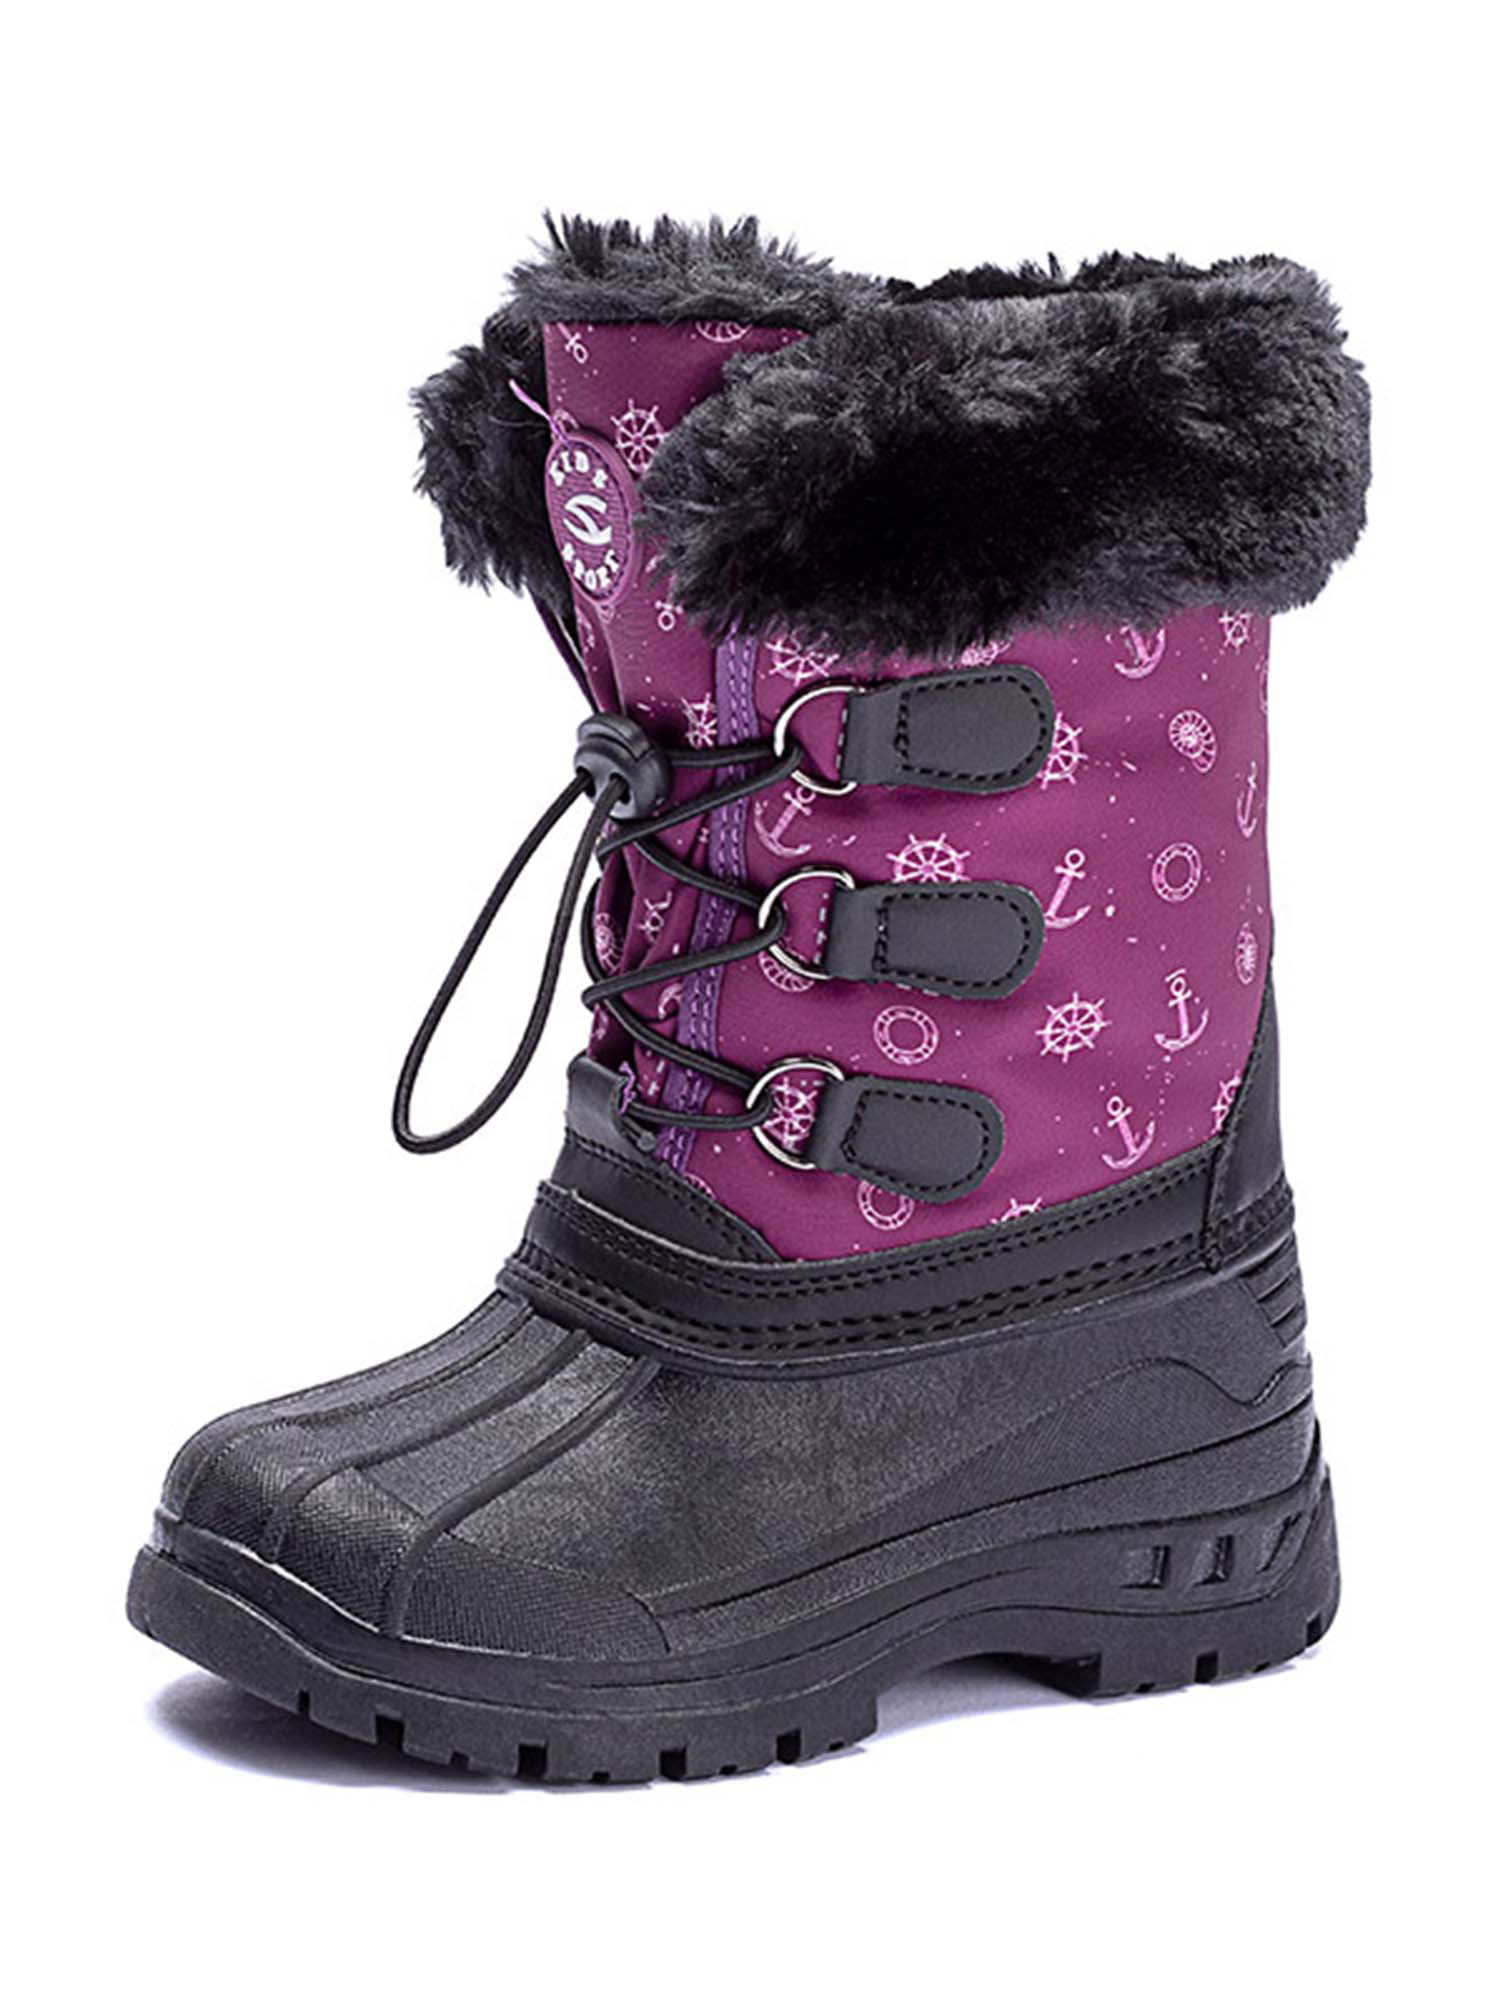 Kids Snow Boots Boys & Girls Winter Boots Lightweight Waterproof Cold Weather Outdoor Boots   Toddler/Little Kid/Big Kid